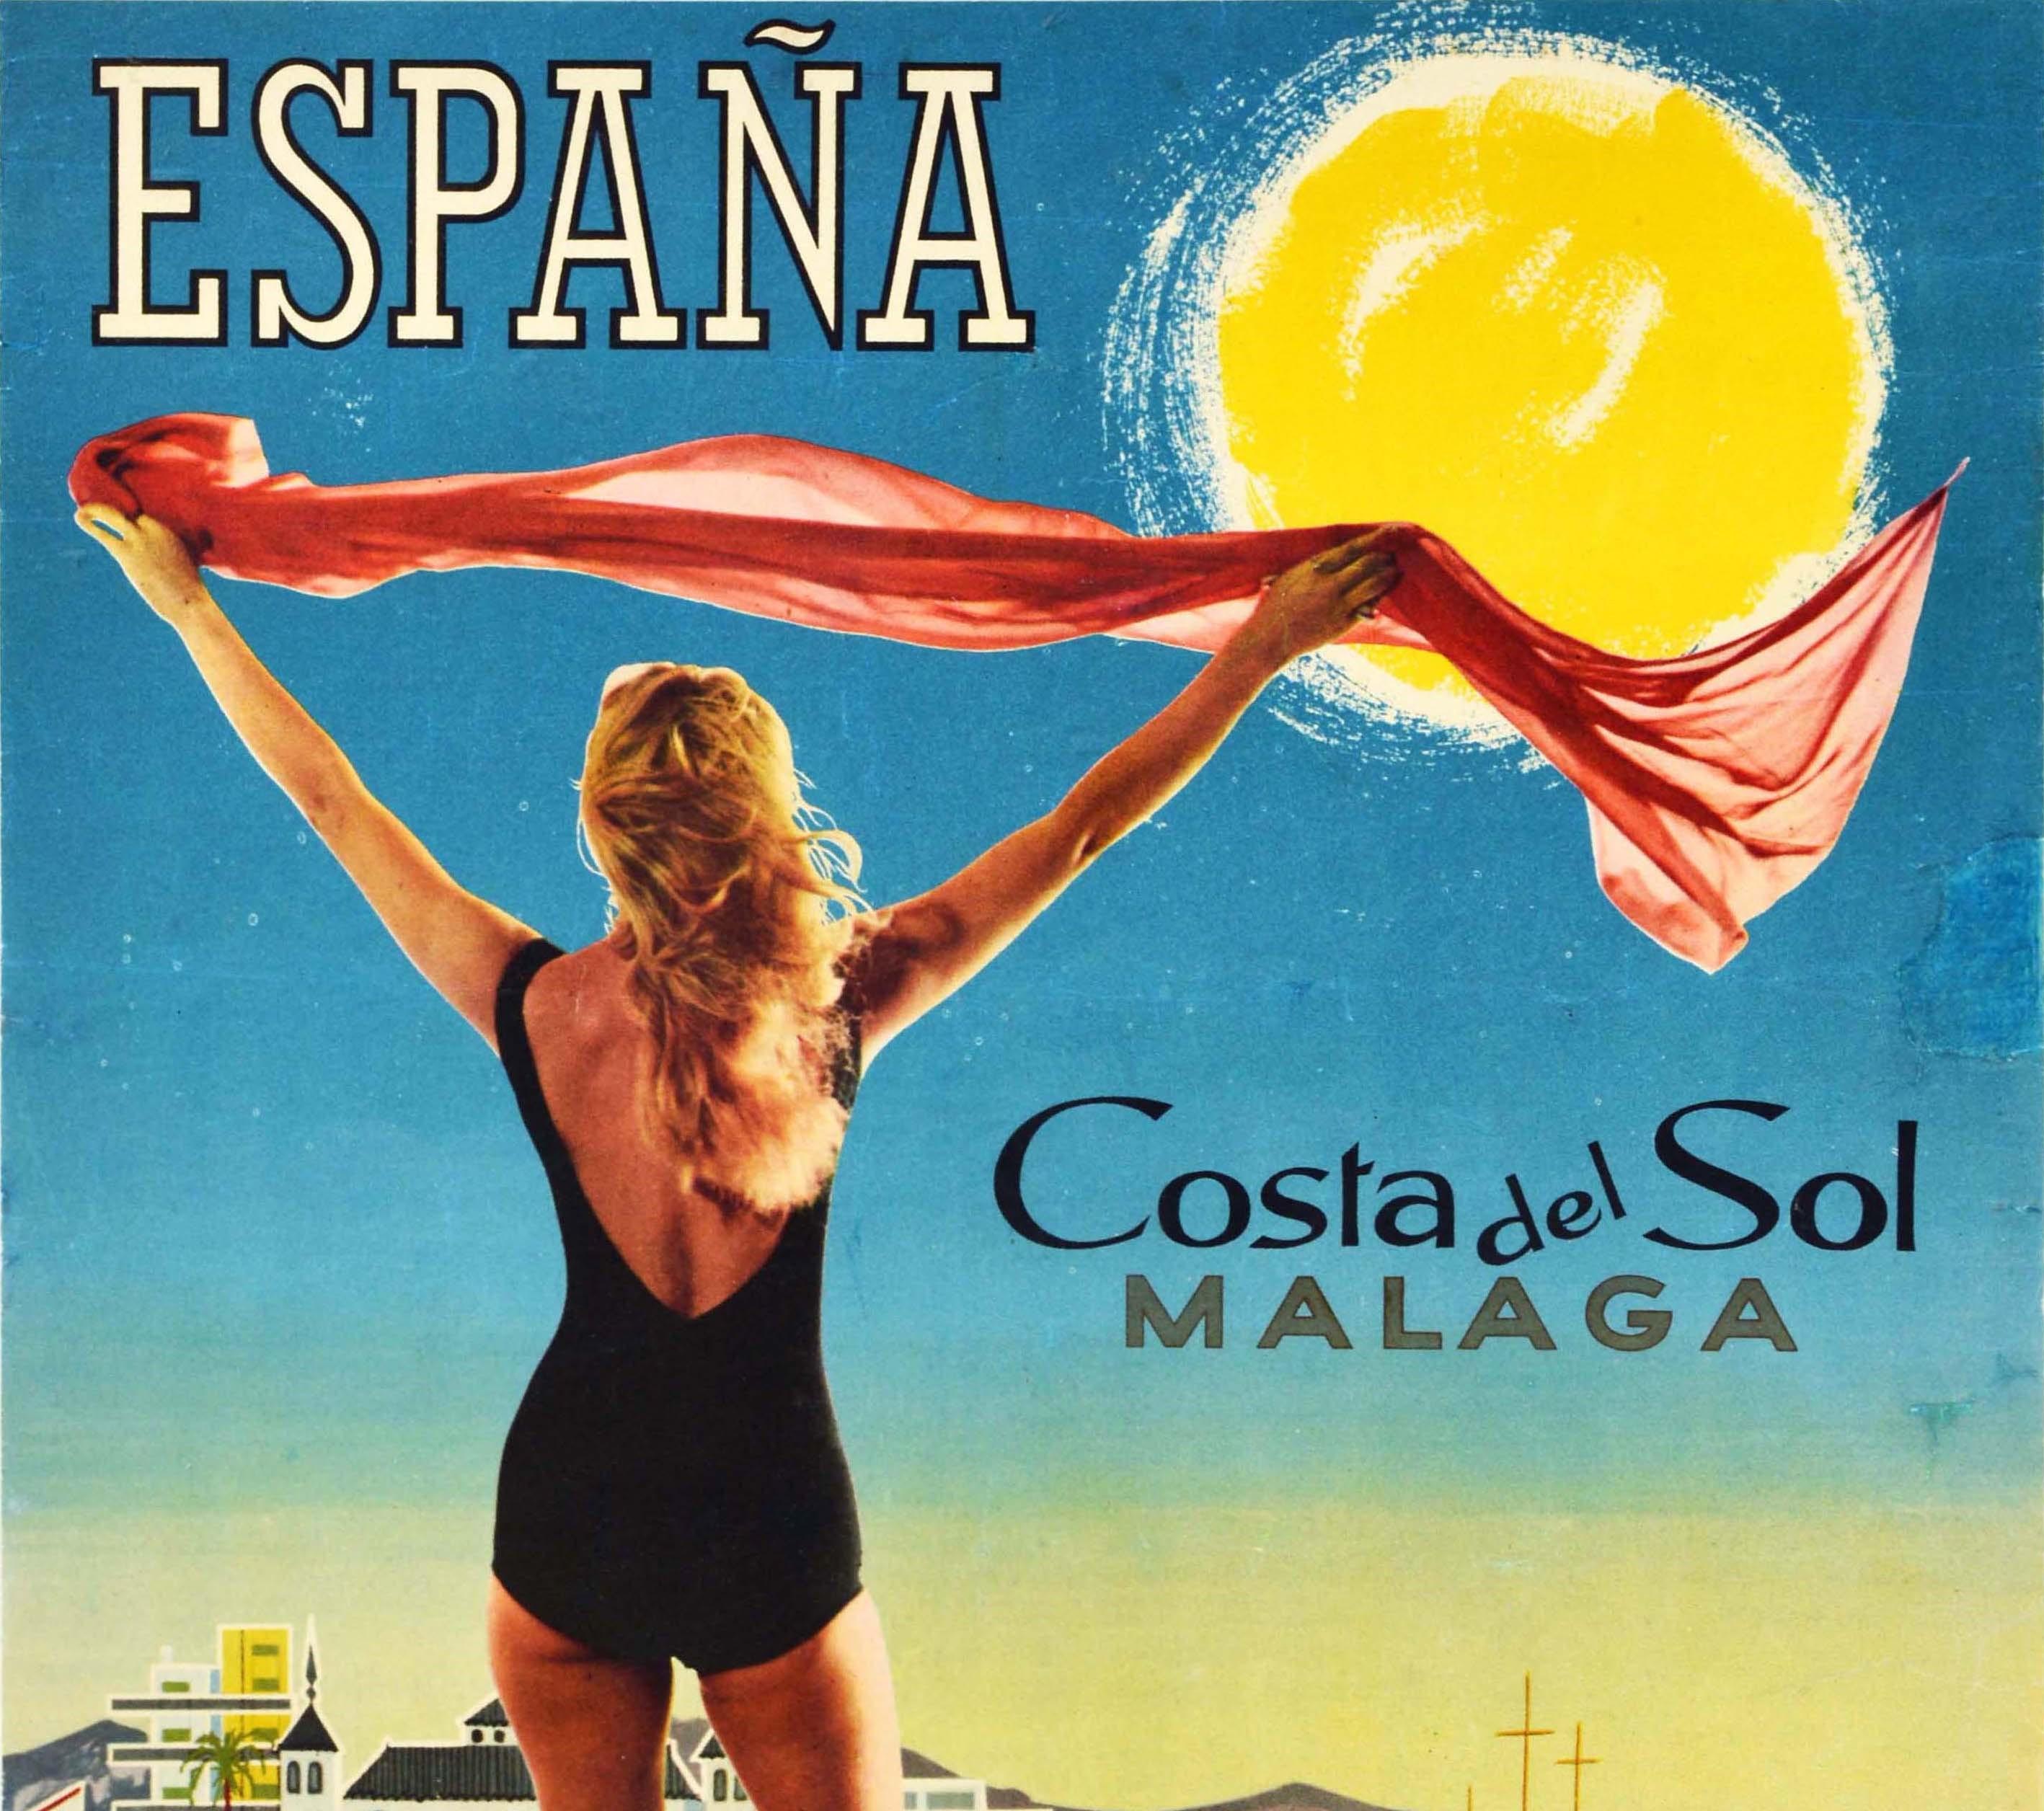 Original Vintage Iberia Air Travel Poster For Costa Del Sol Malaga Espana Spain - Print by Unknown